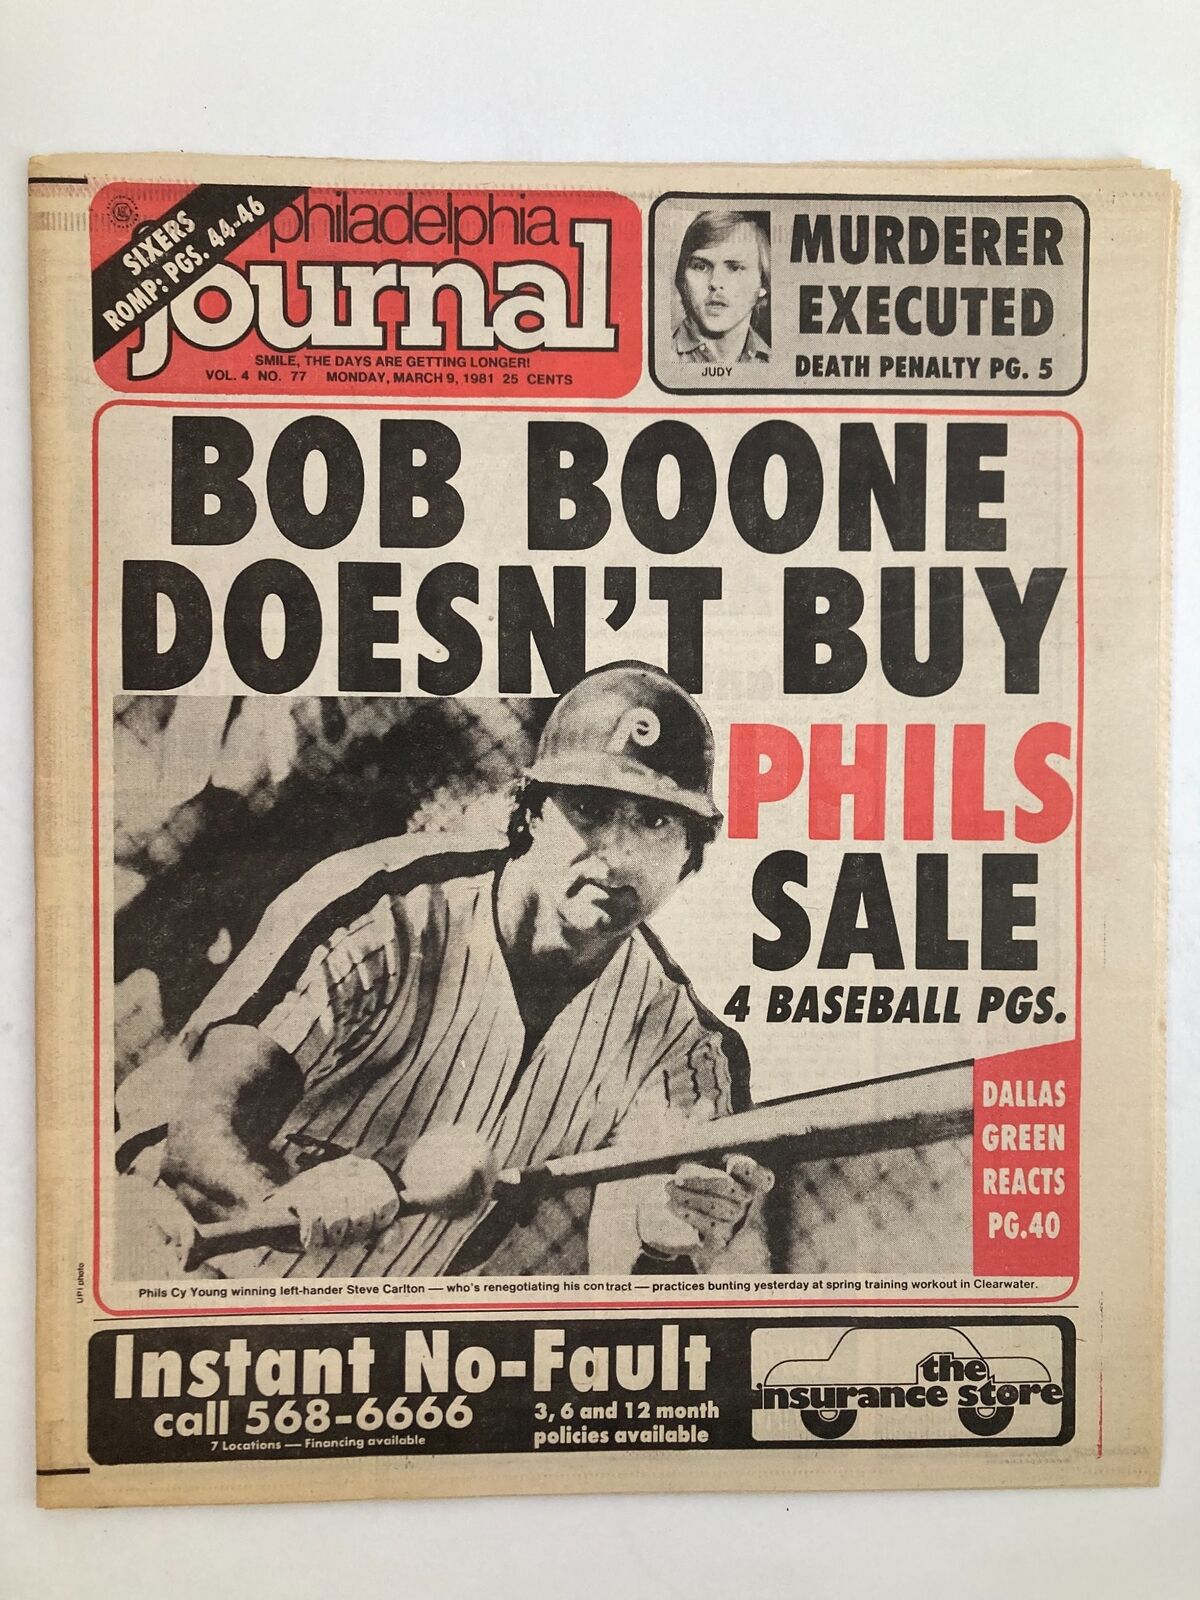 Philadelphia Journal Tabloid March 9 1981 Vol 4 #77 MLB Phillies Bob Boone